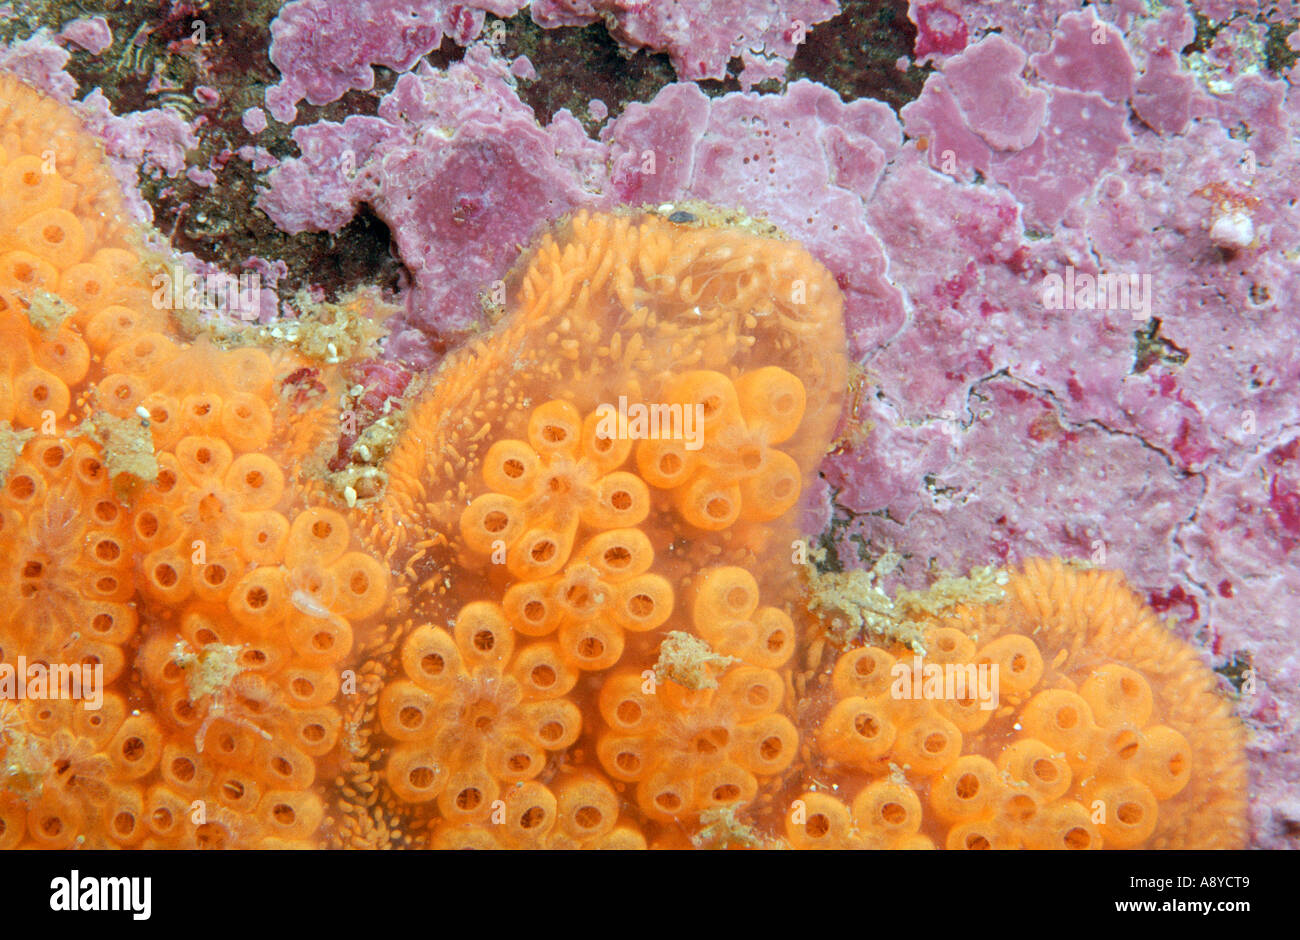 Closeup yellow form of colonial sea squirt ascidian (Ascidiacea) Botryllus schlosseri common in Atlantic and Pacific Underwater Stock Photo